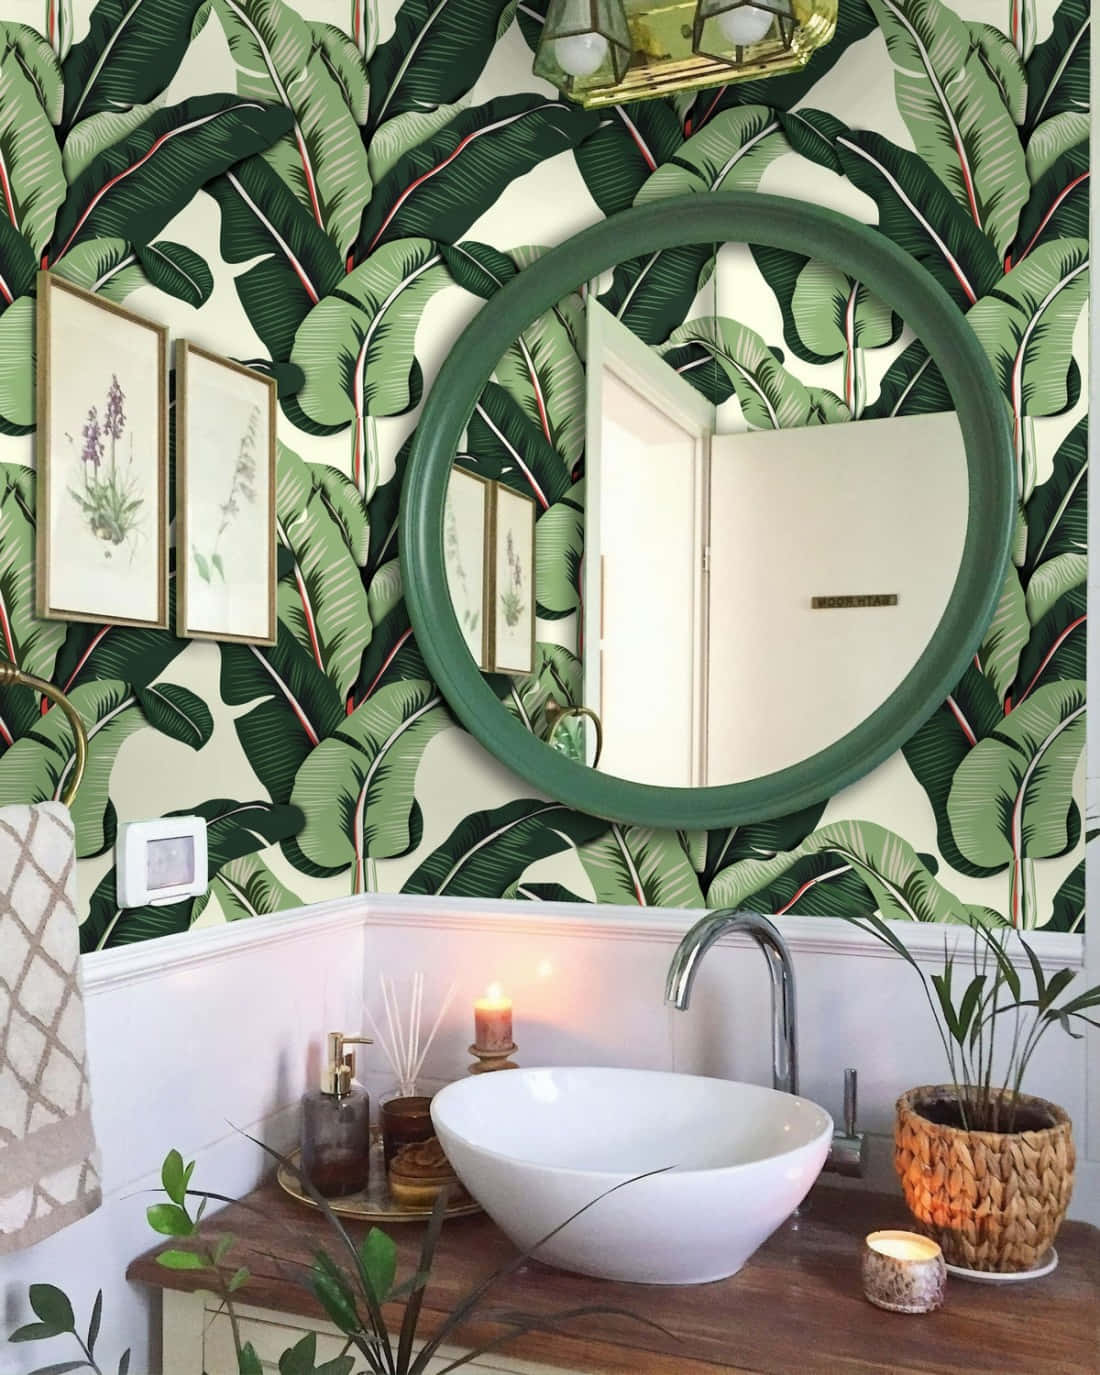 Caption: Refreshing Tropical Bathroom With Green Leafy Walls Background